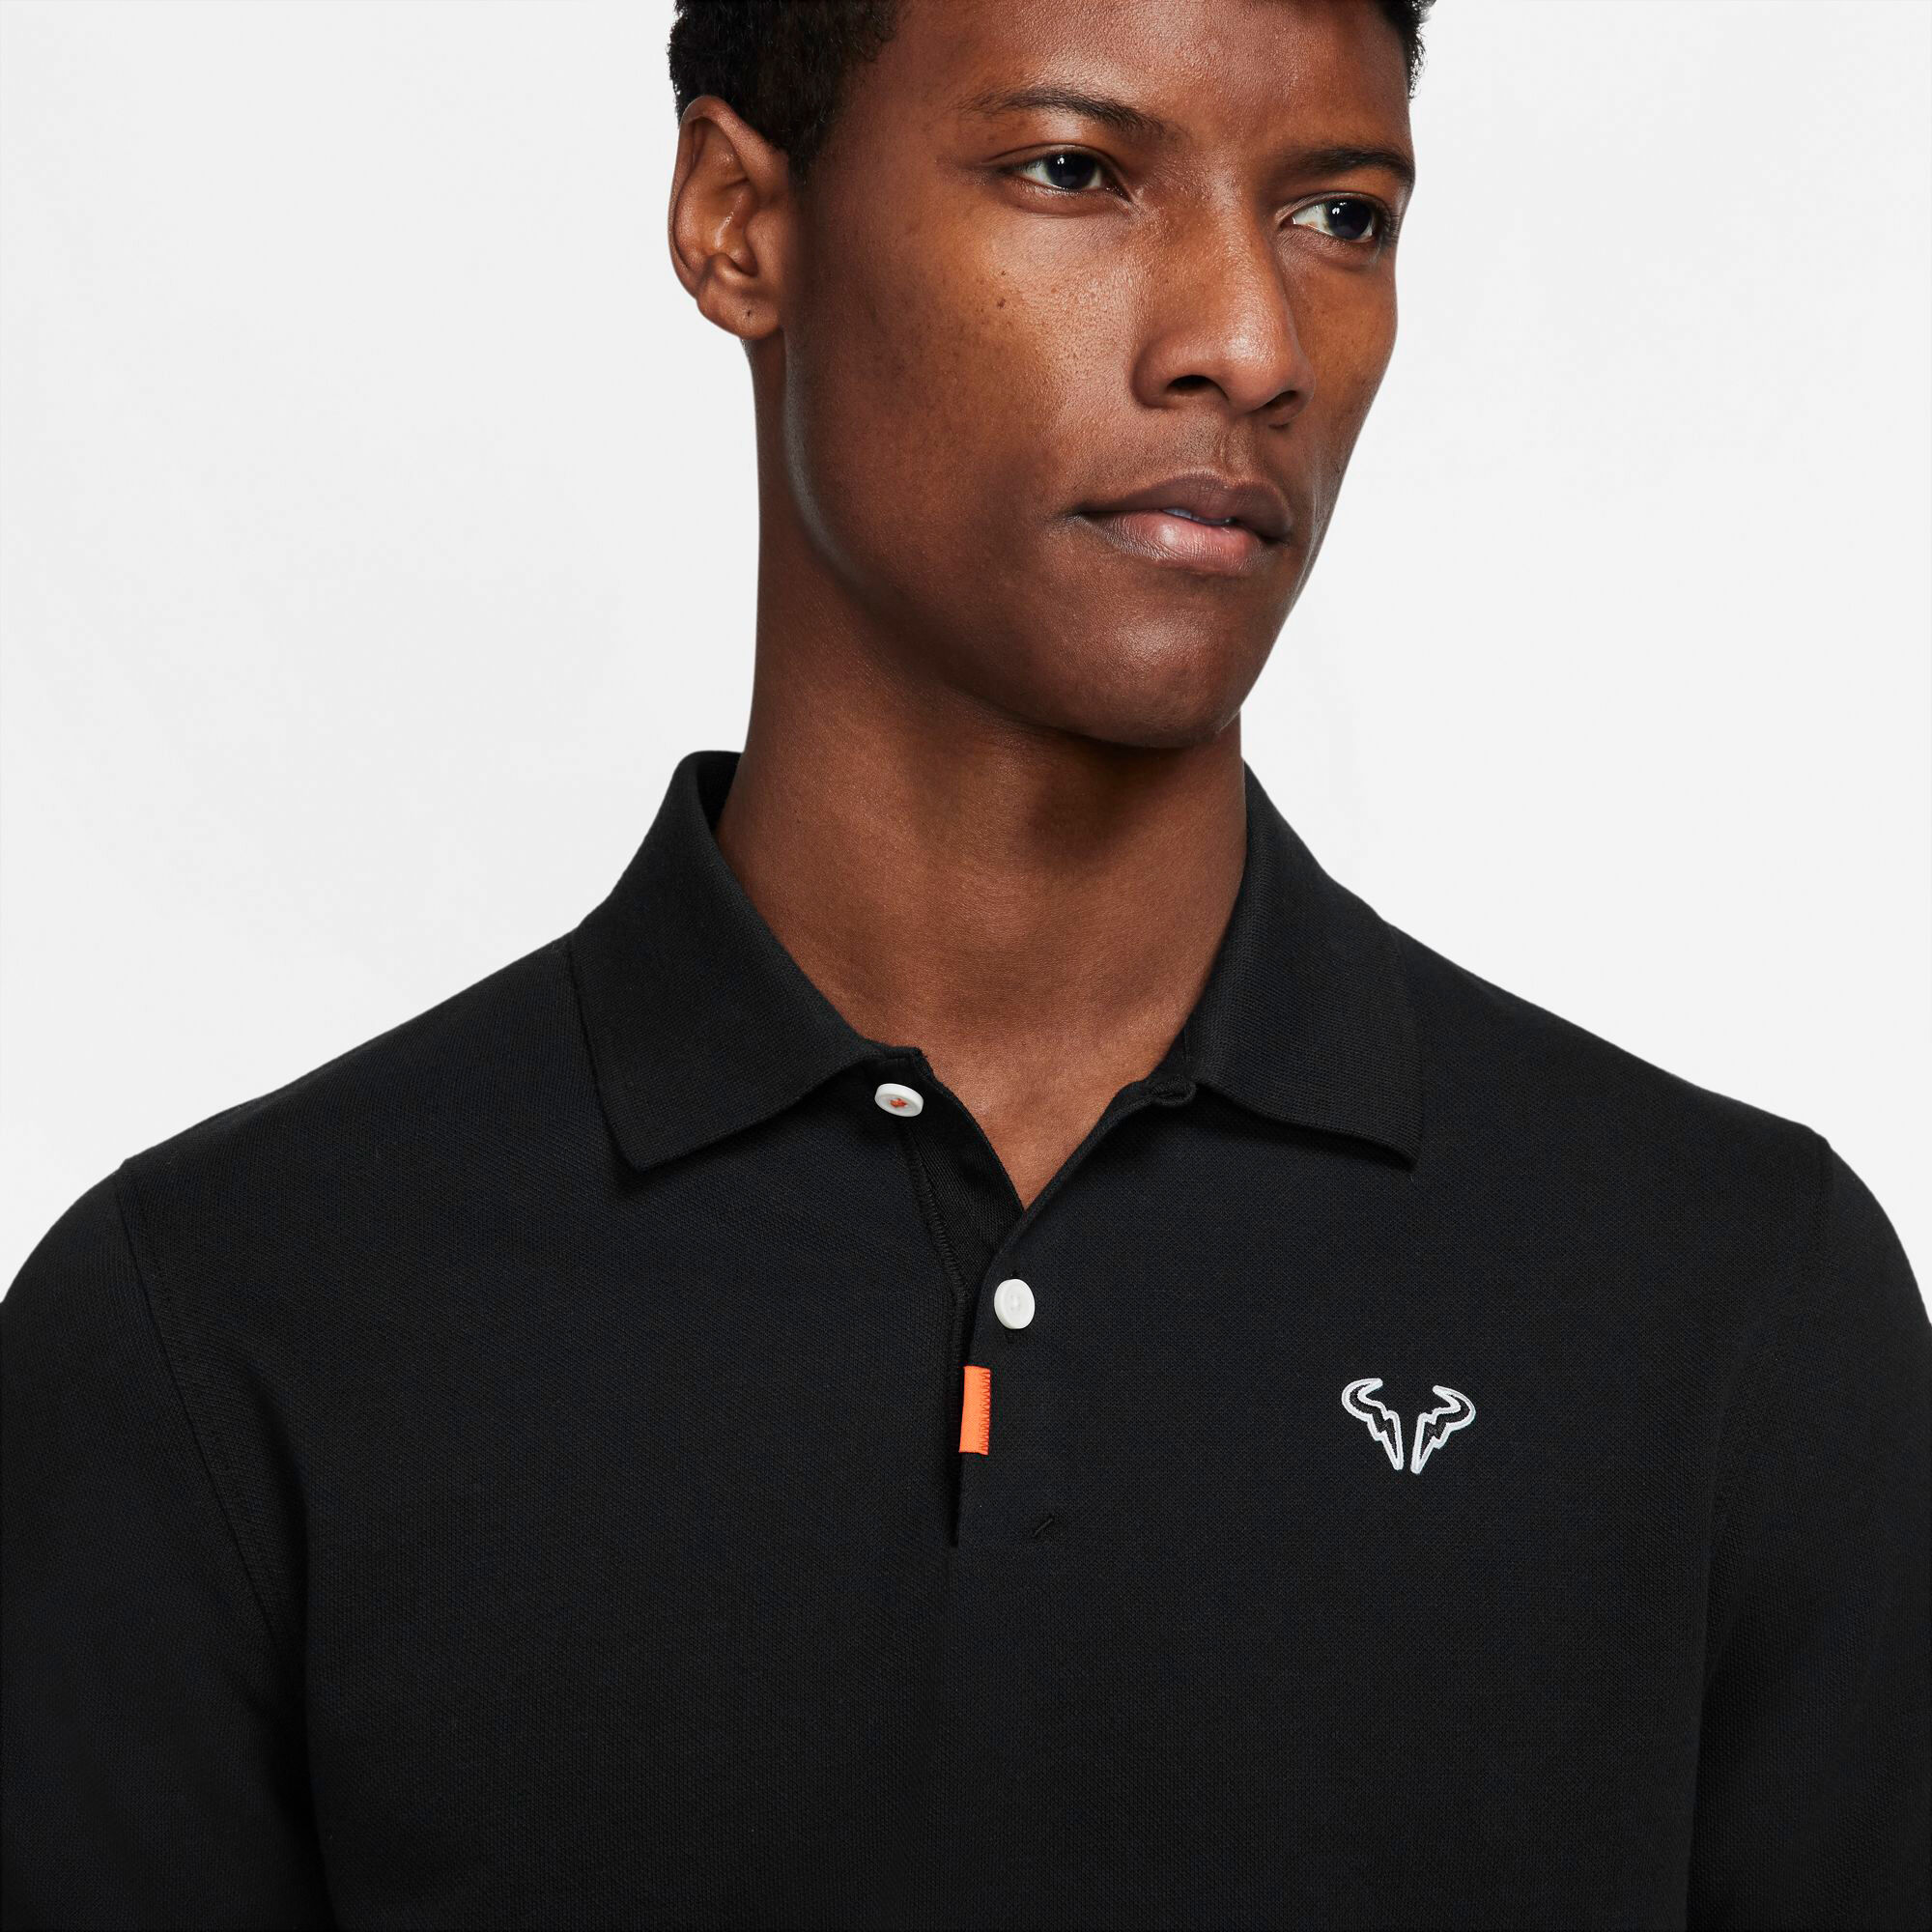 Nike Rafael Nadal Slim 2.0 Polo Hombres Negro compra | Tennis-Point